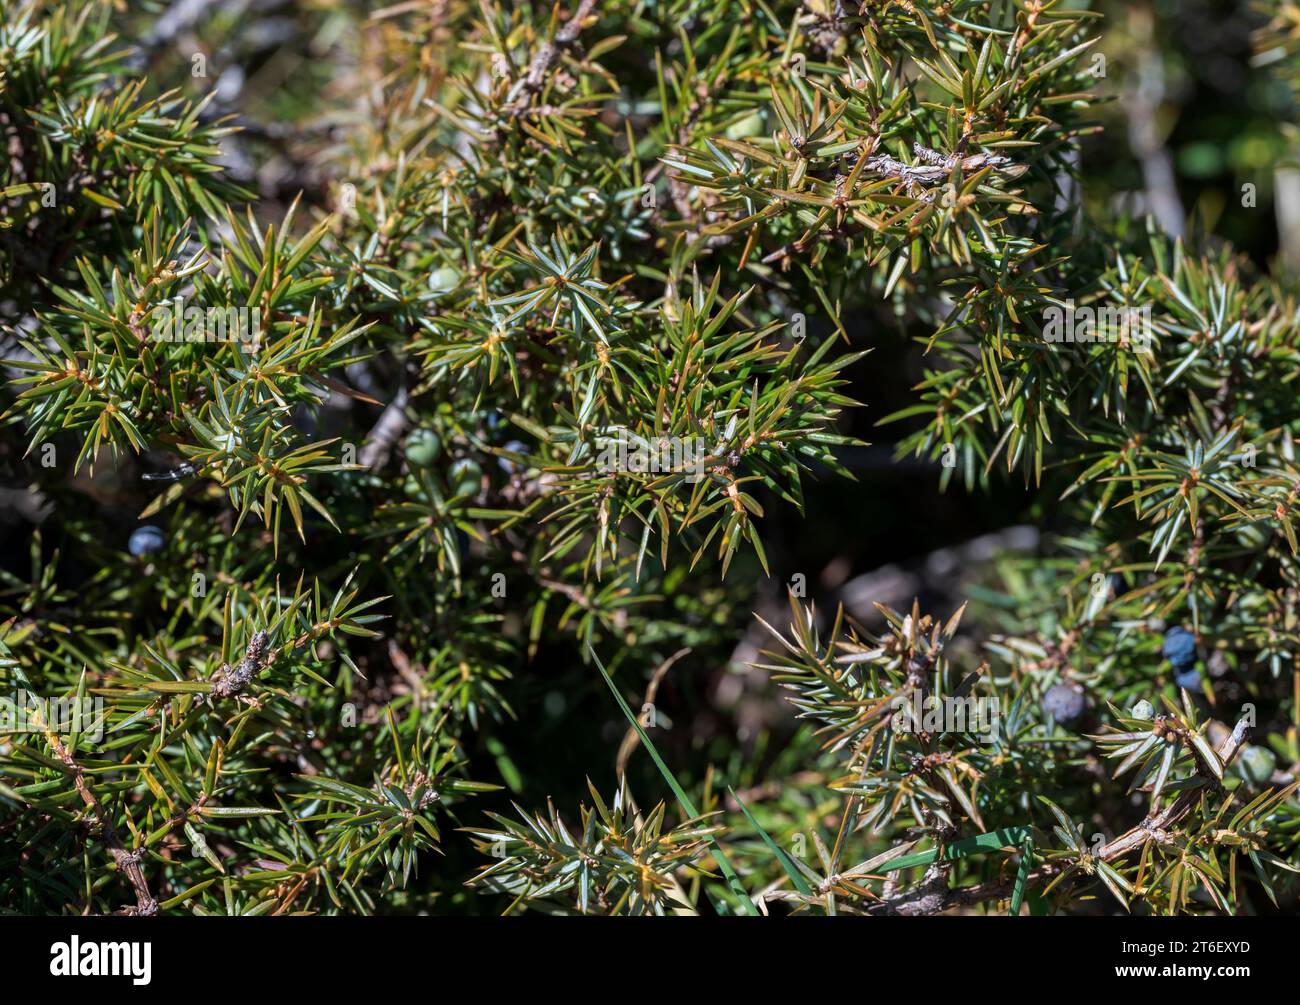 Common Juniper, Juniperus communis subsp. alpina. Photo taken in La Pedriza, Guadarrama Mountains National Park, Madrid, Spain. Stock Photo